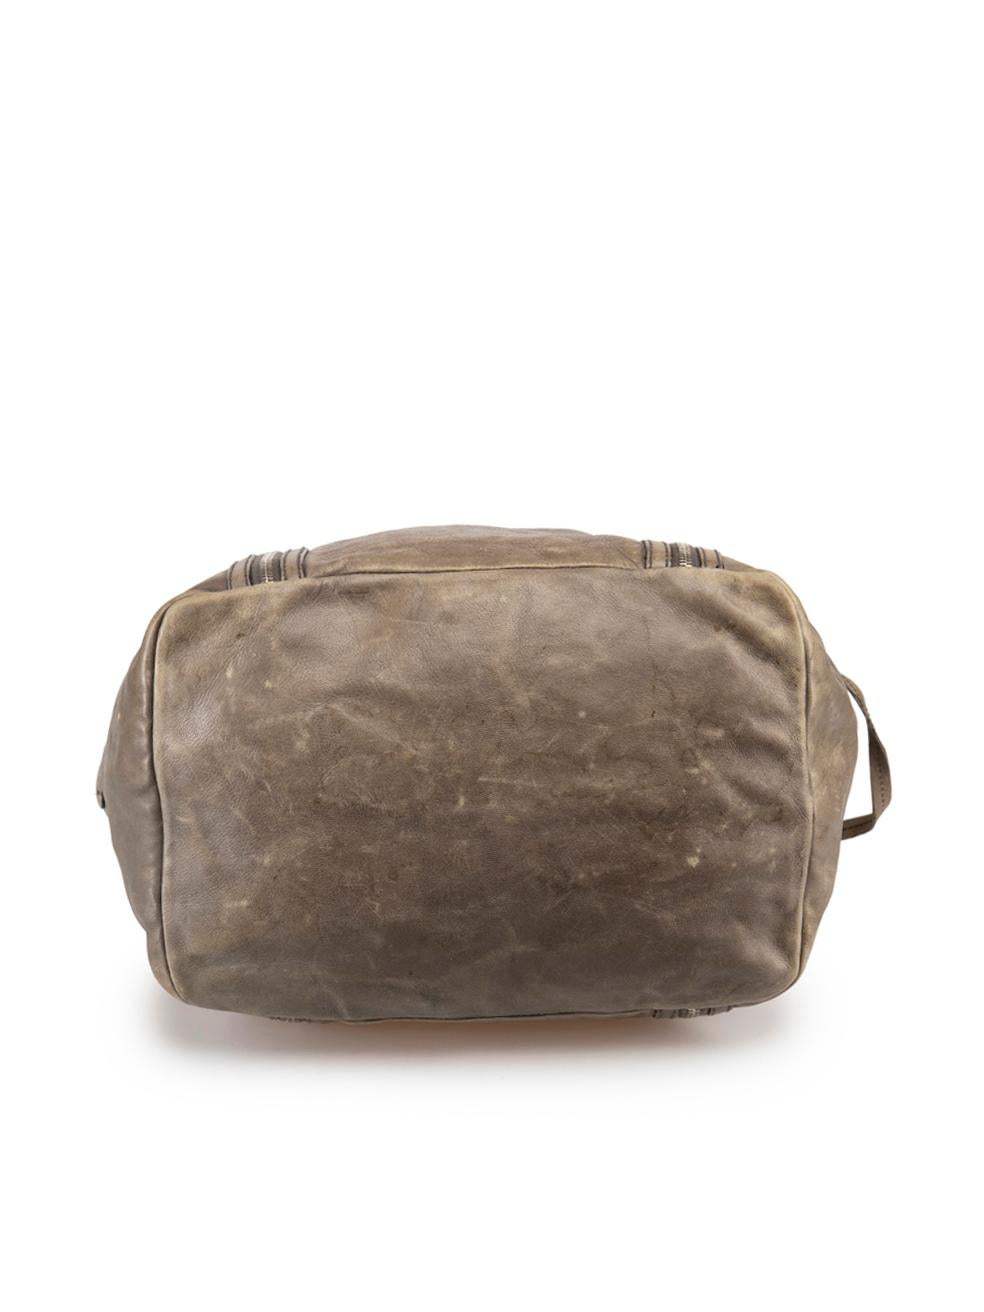 Women's Dolce & Gabbana Khaki Leather Strap Tote Bag